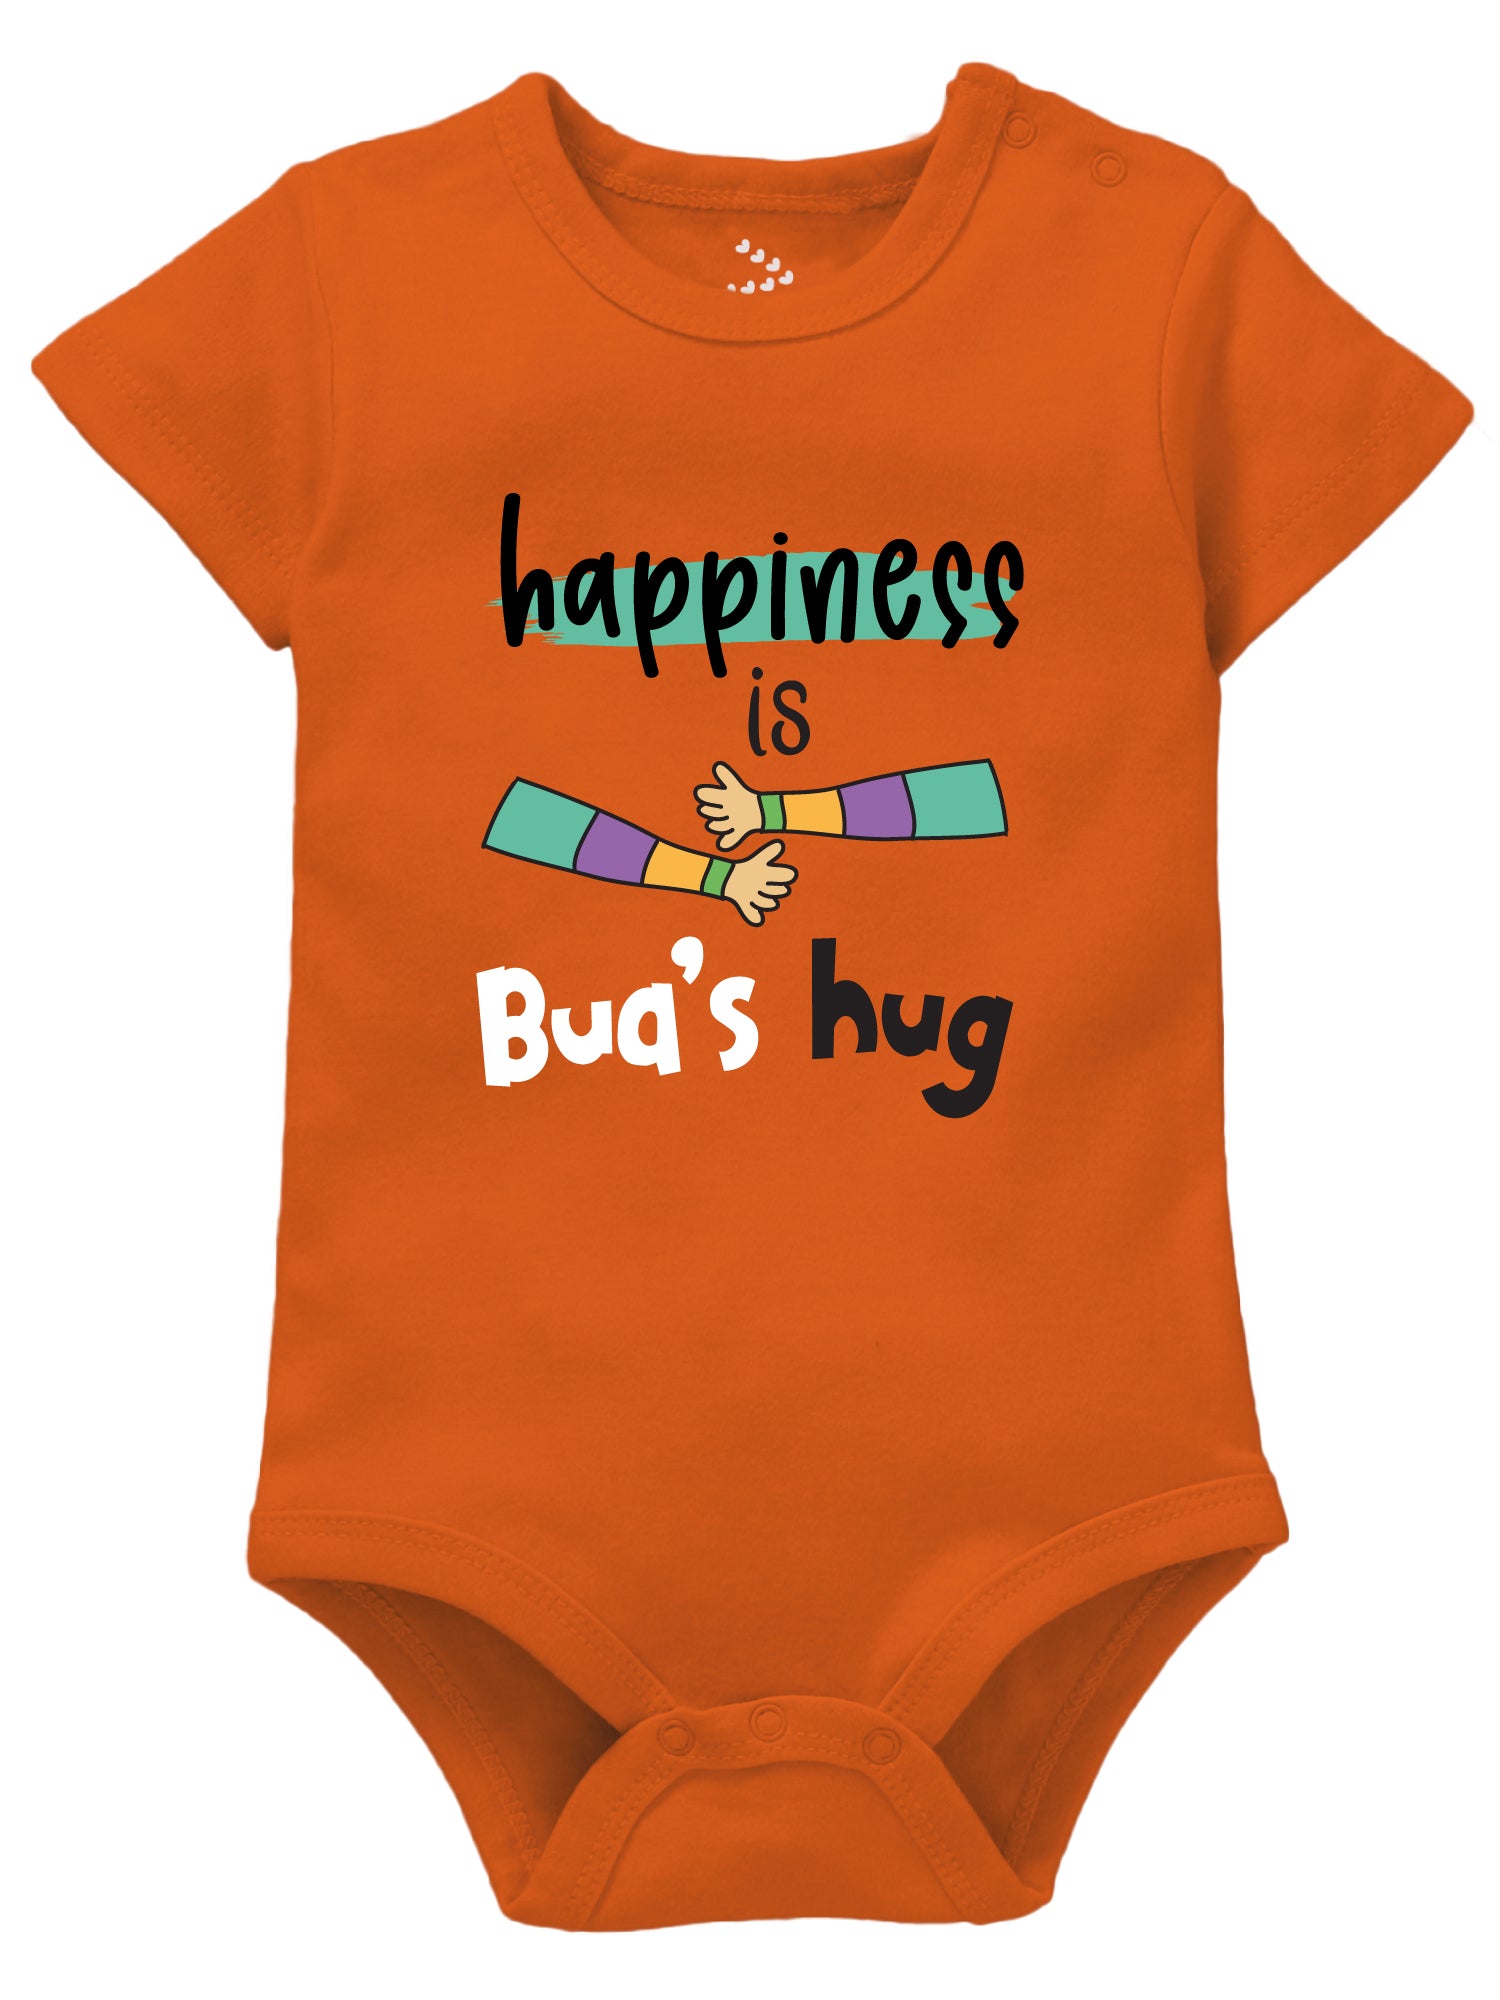 Happiness is Bua's Hug - Onesie